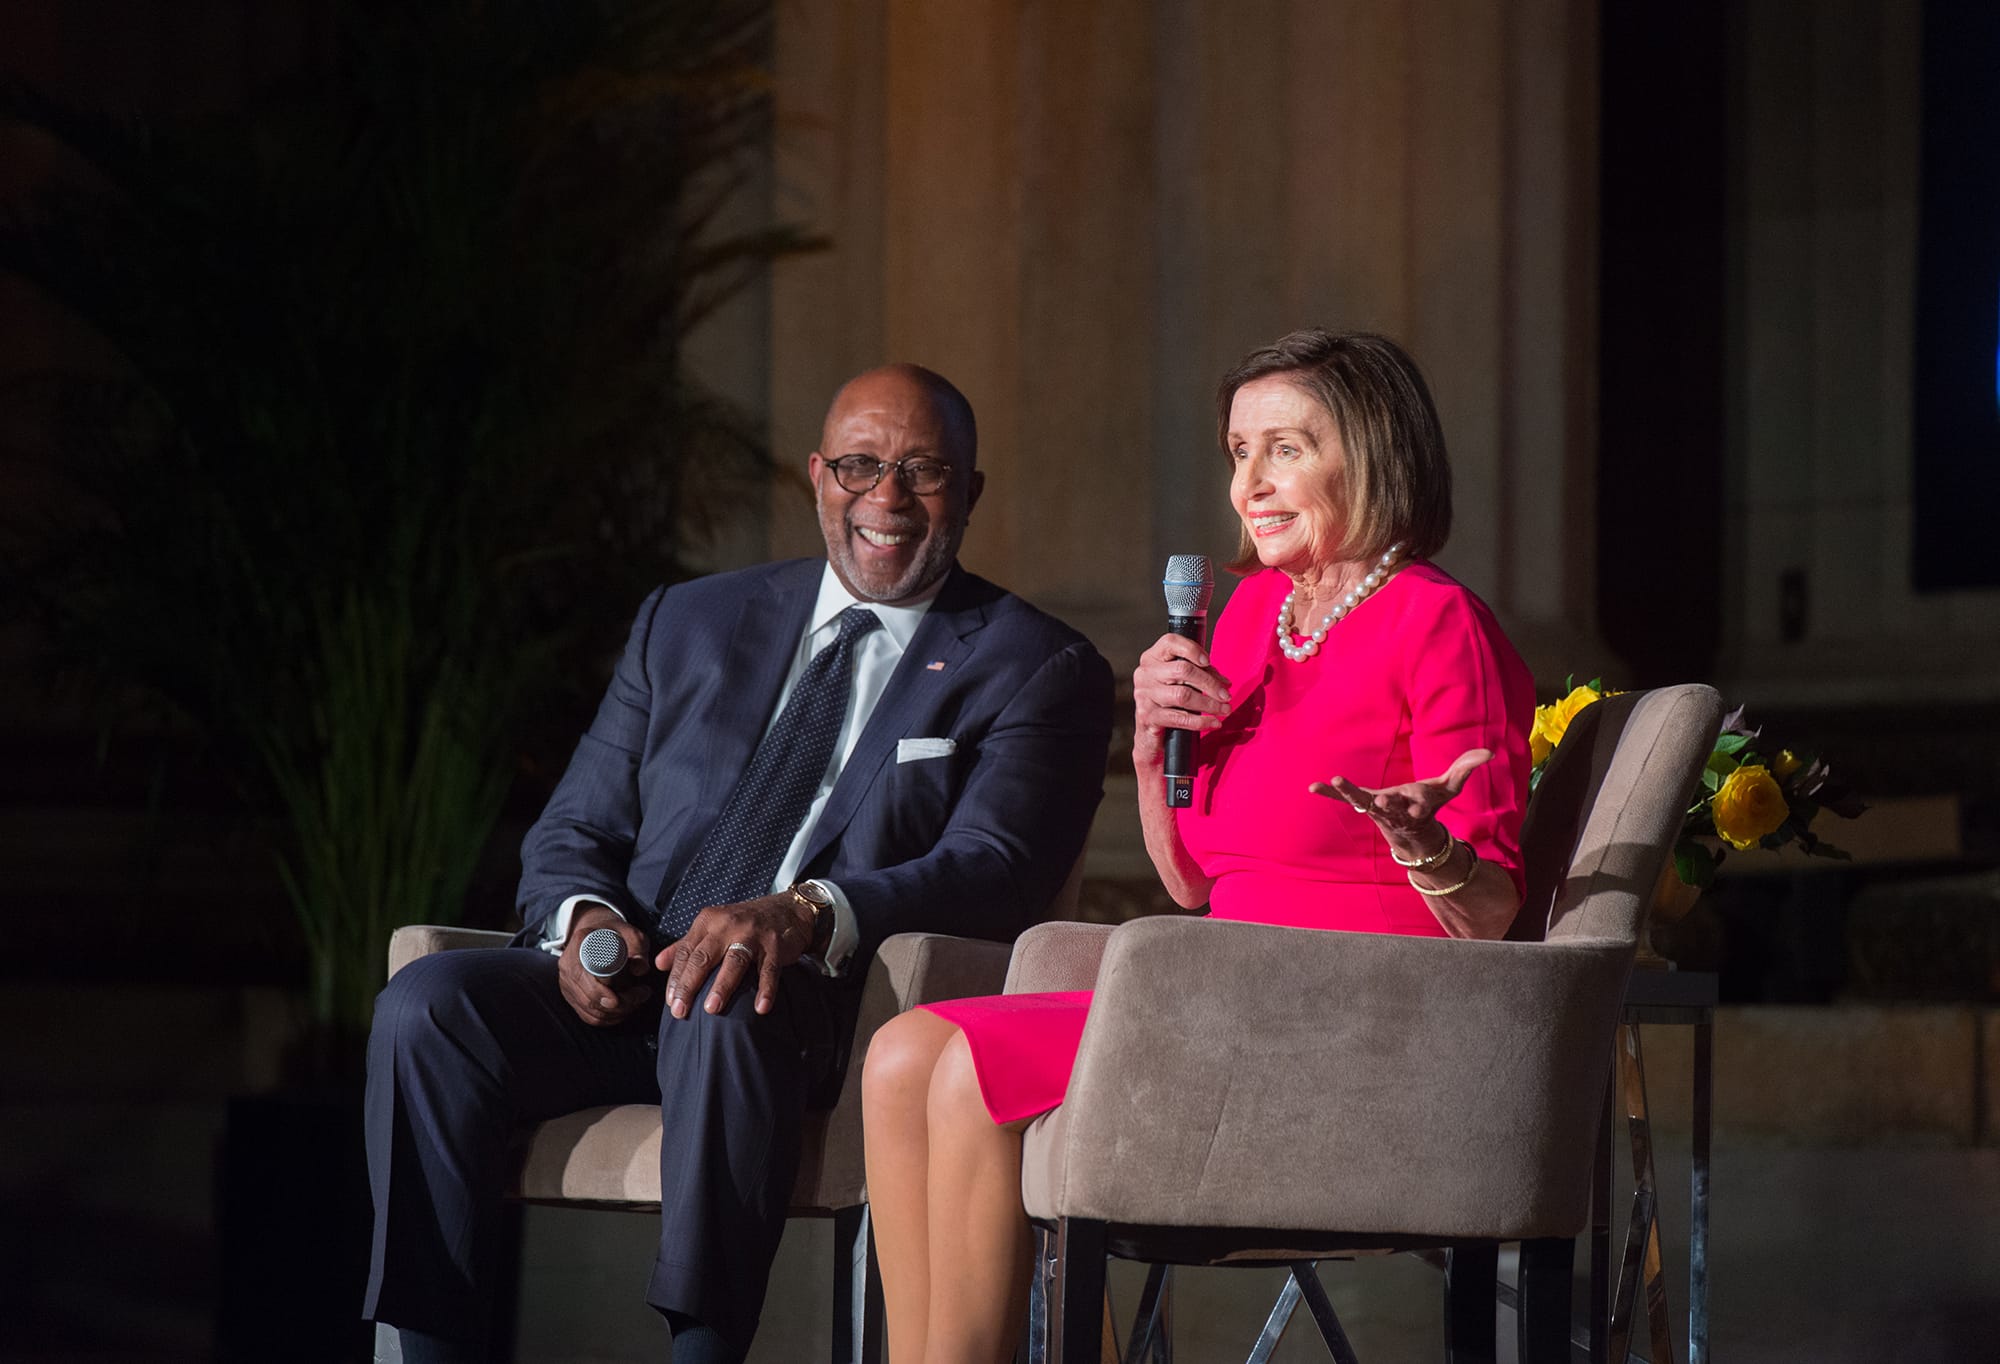 Ron Kirk and Speaker Nancy Pelosi. LBJ Foundation photo by Daniel Swartz, 2019.